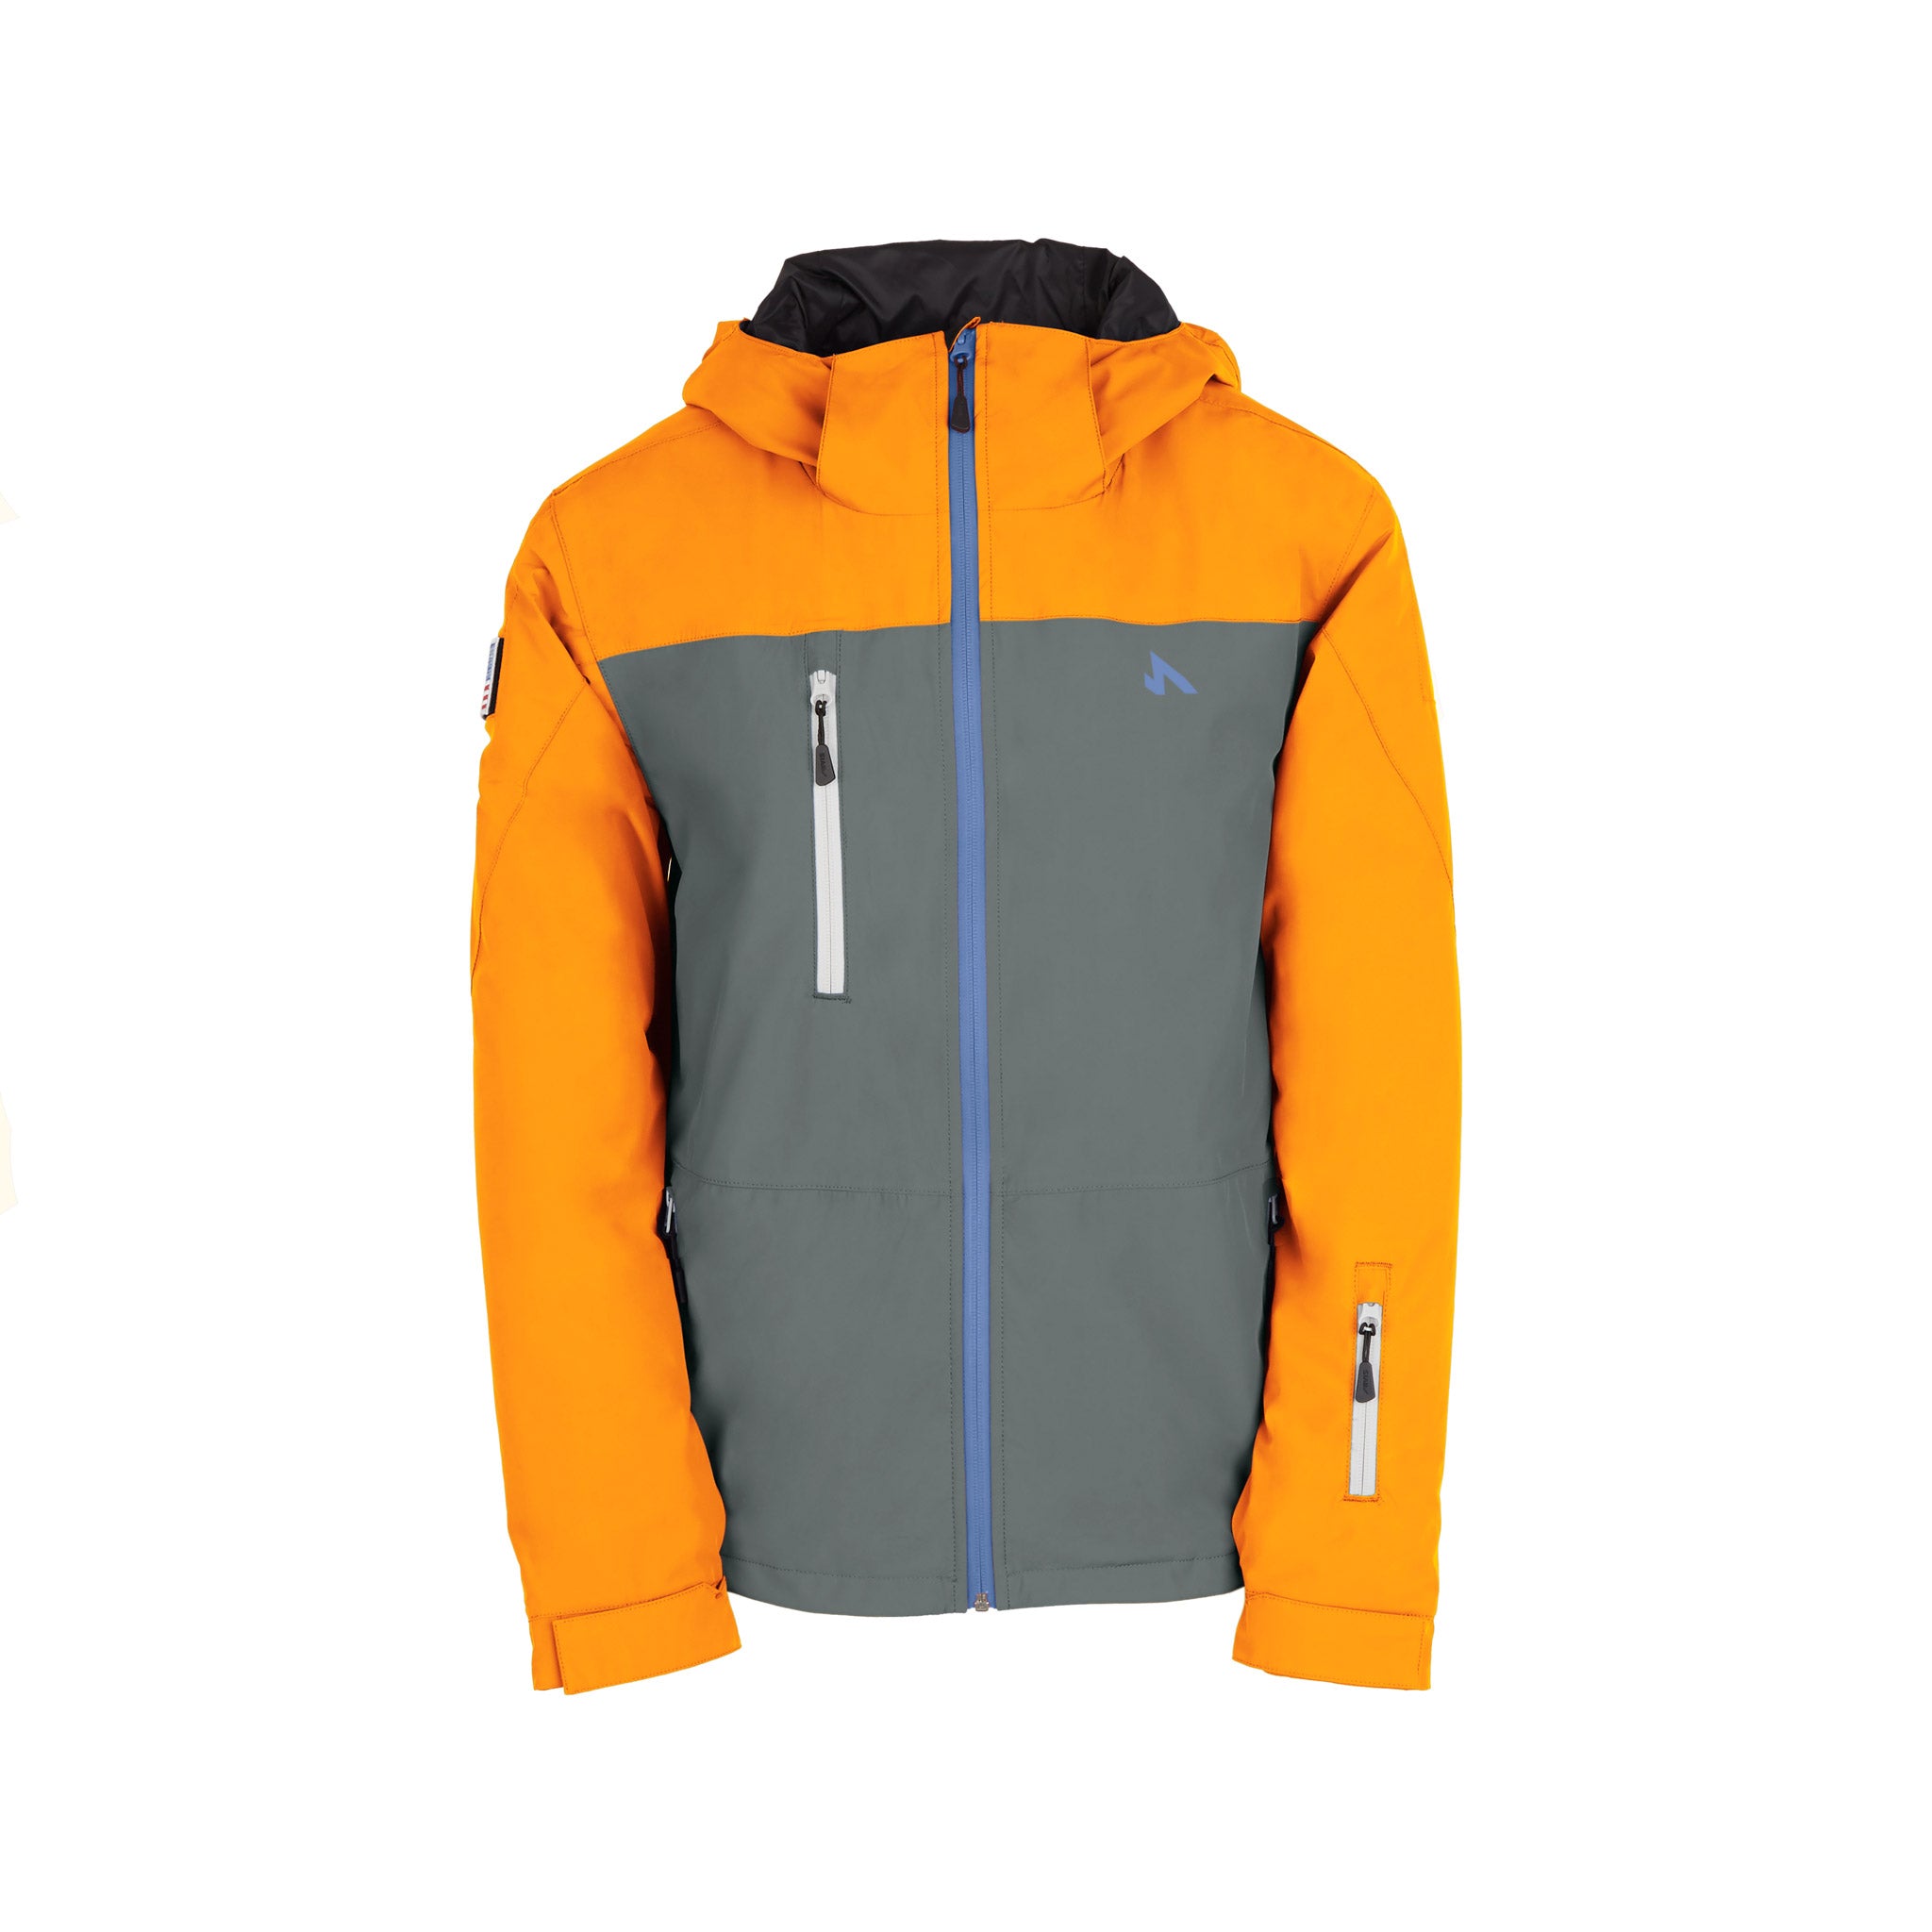 Protego Ski Jacket - Orange - Charcoal - Front